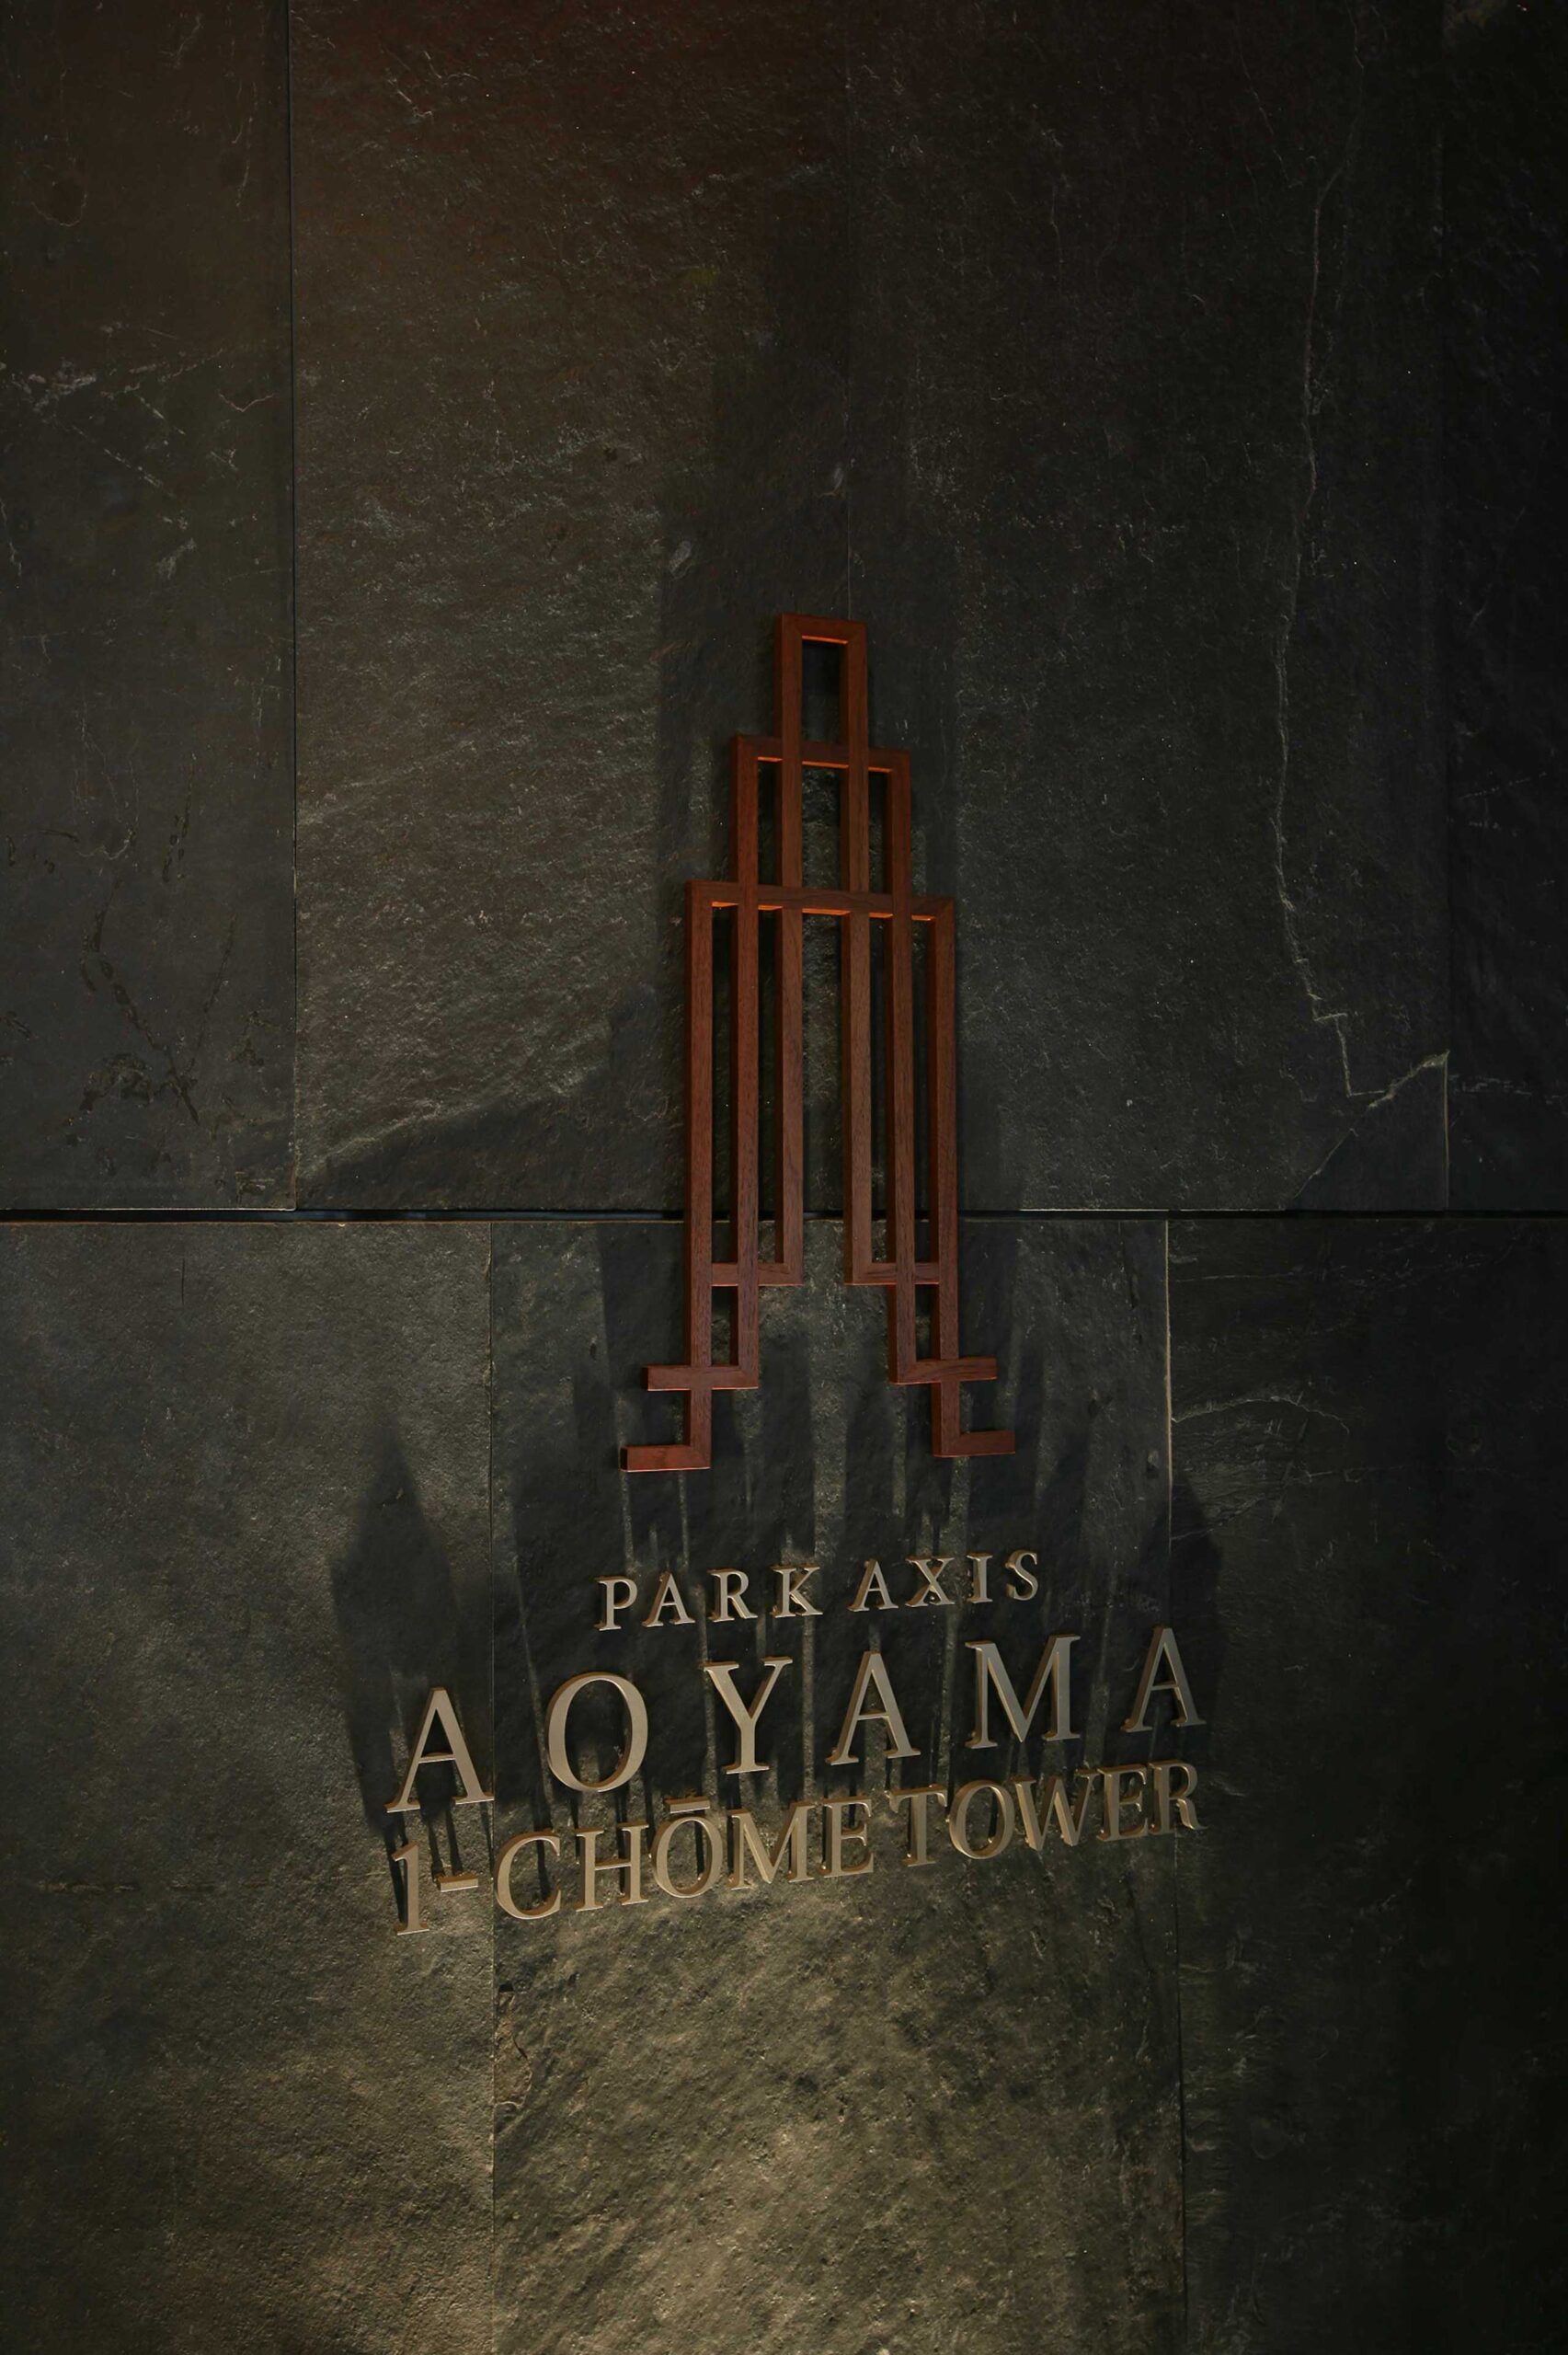 sign AOYAMA 1-CHOME TOWER 2006